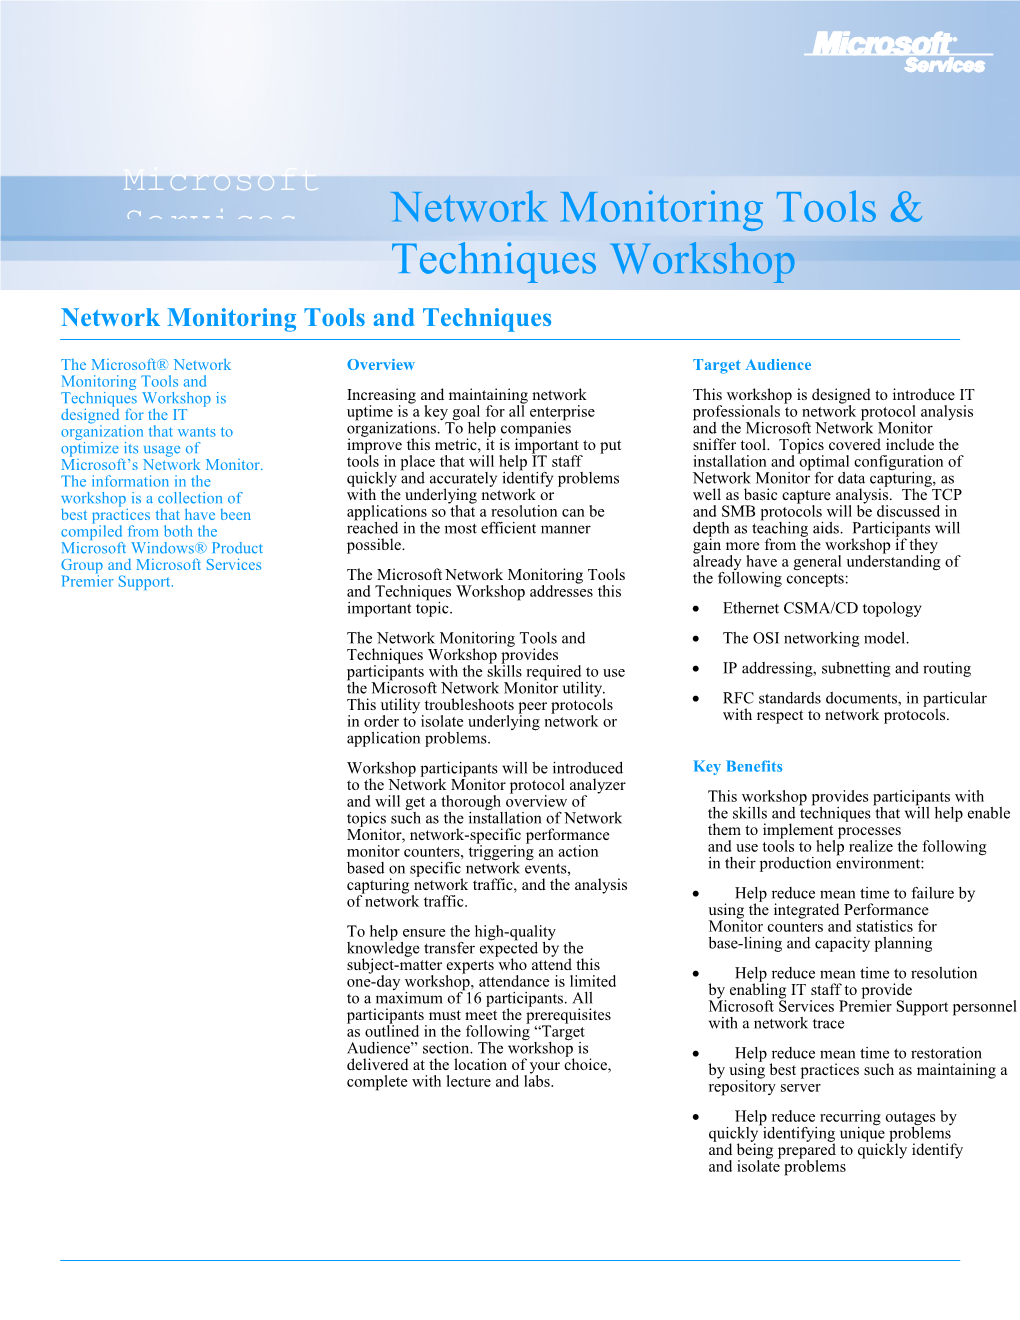 The OSI Networking Model